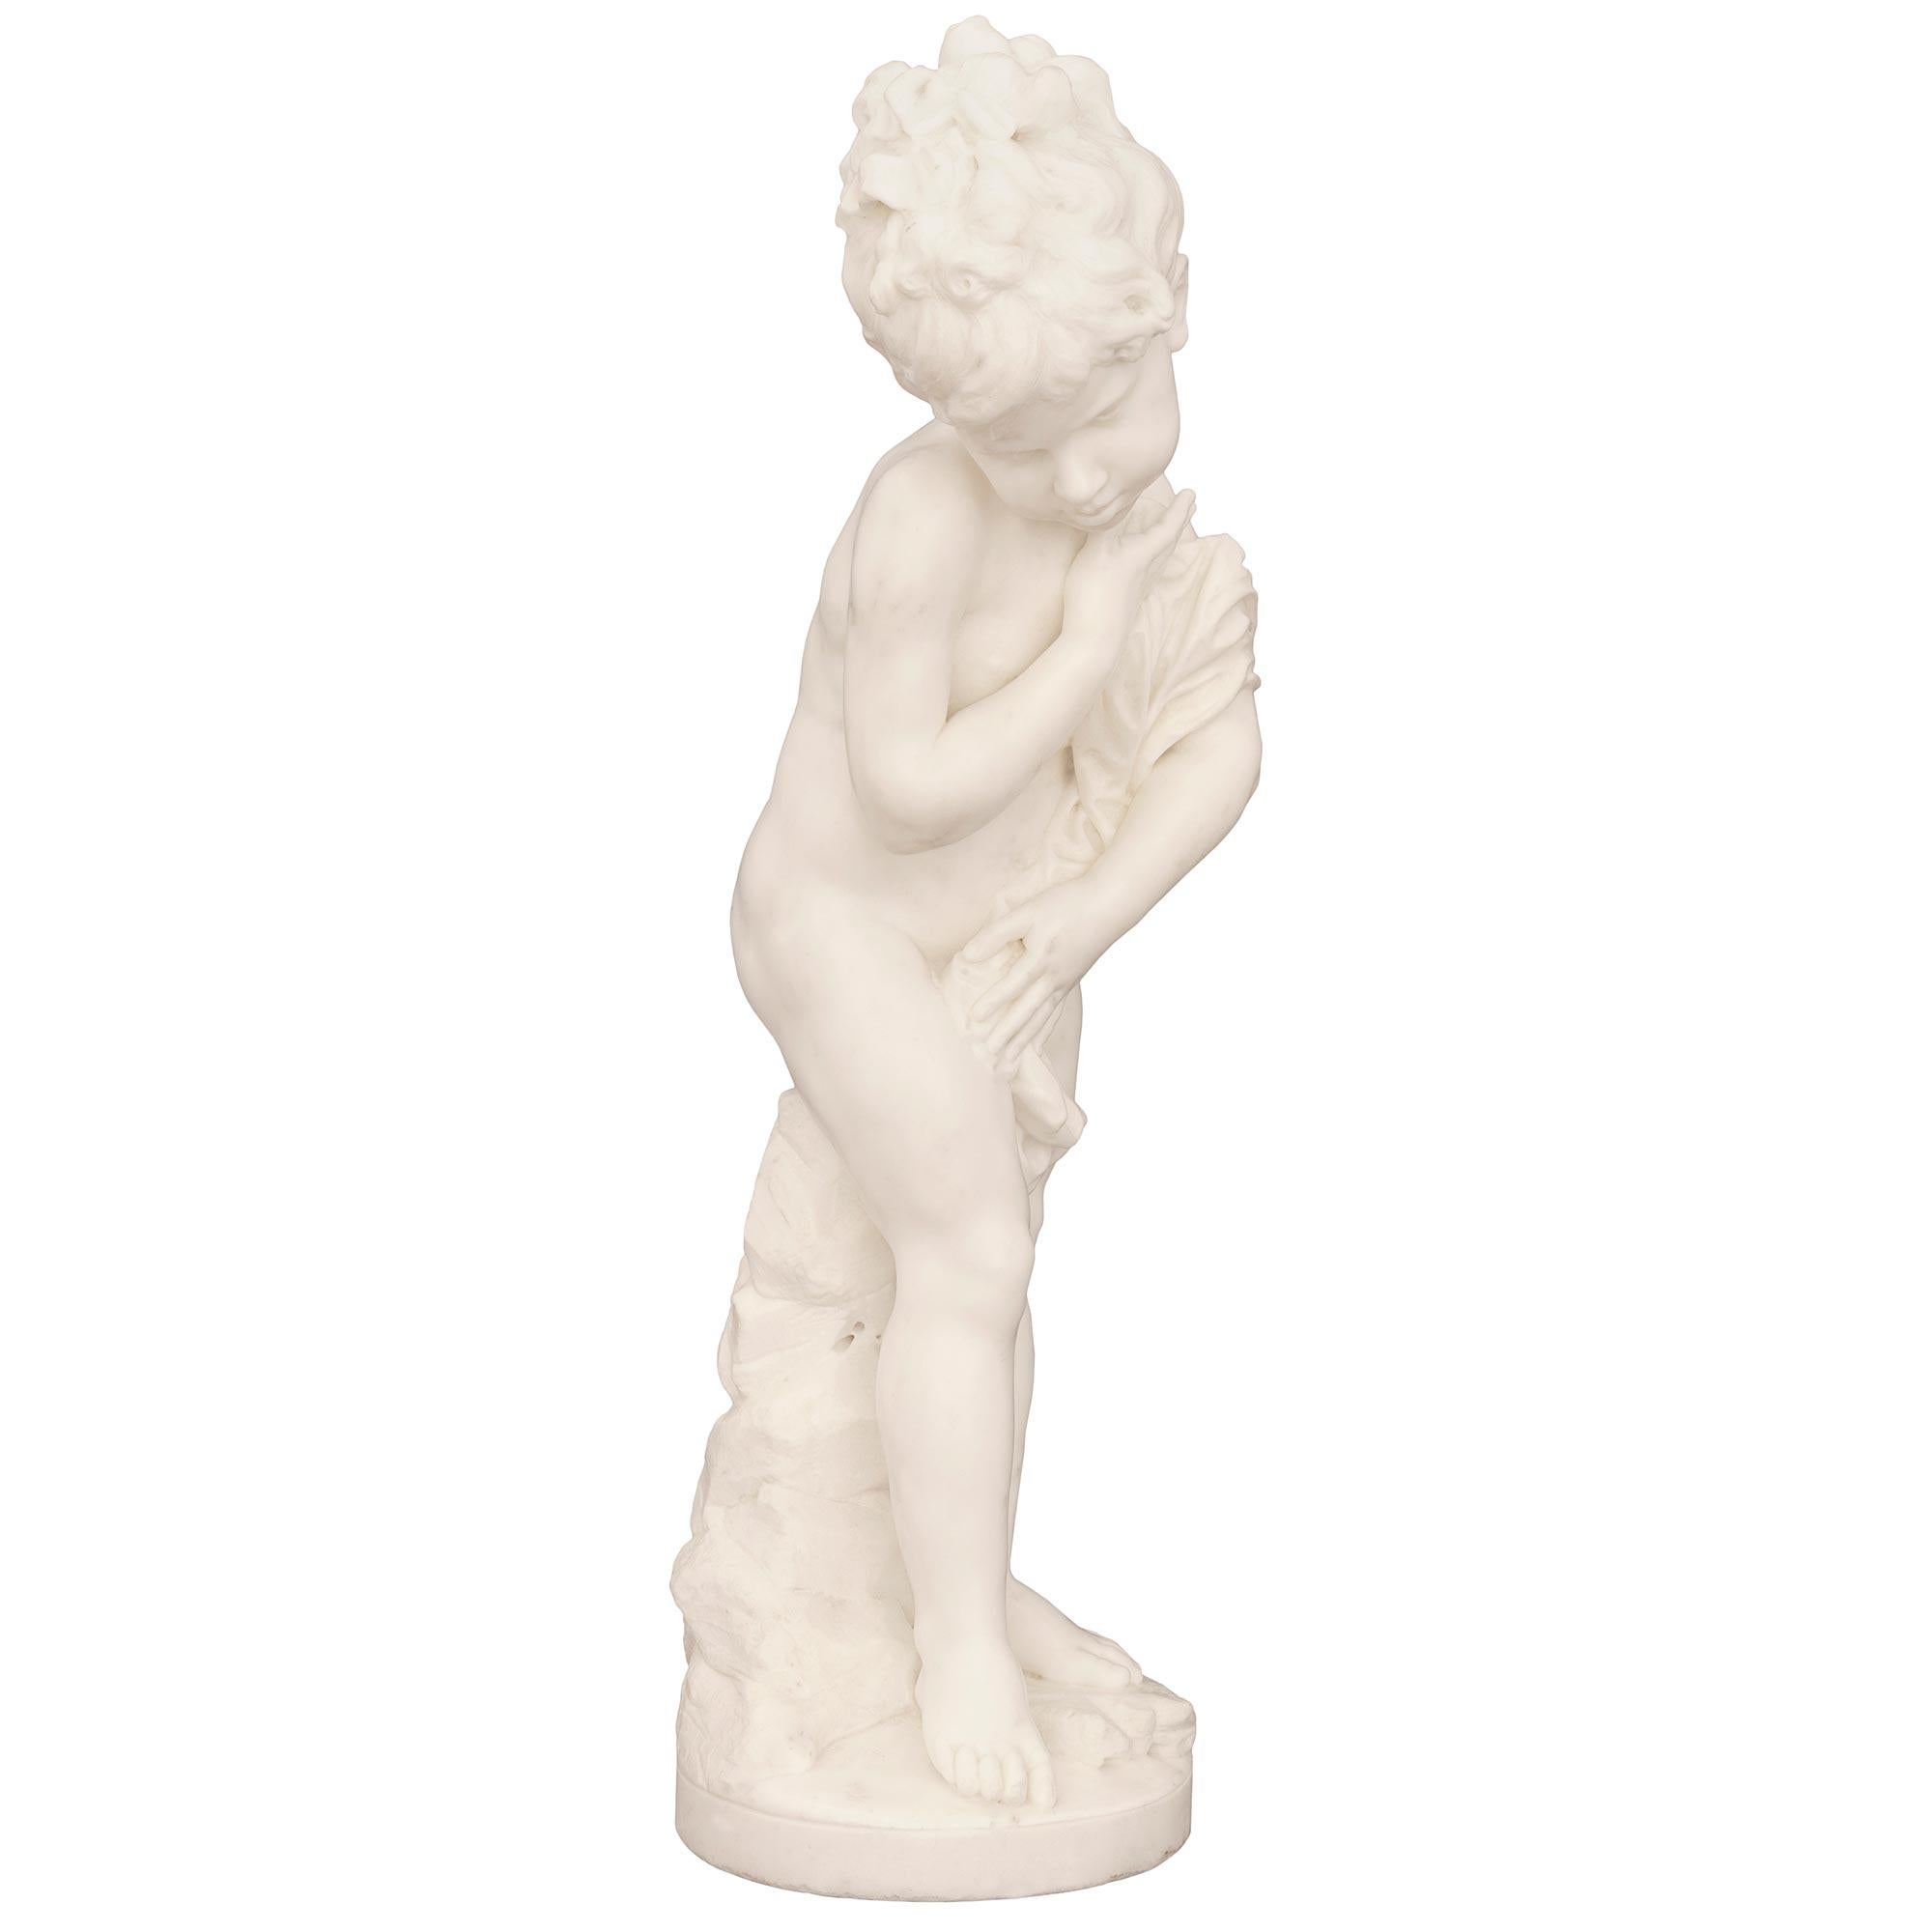 Italian 19th Century White Carrara Marble Statue Signed F. Mariotti Scul In Good Condition For Sale In West Palm Beach, FL